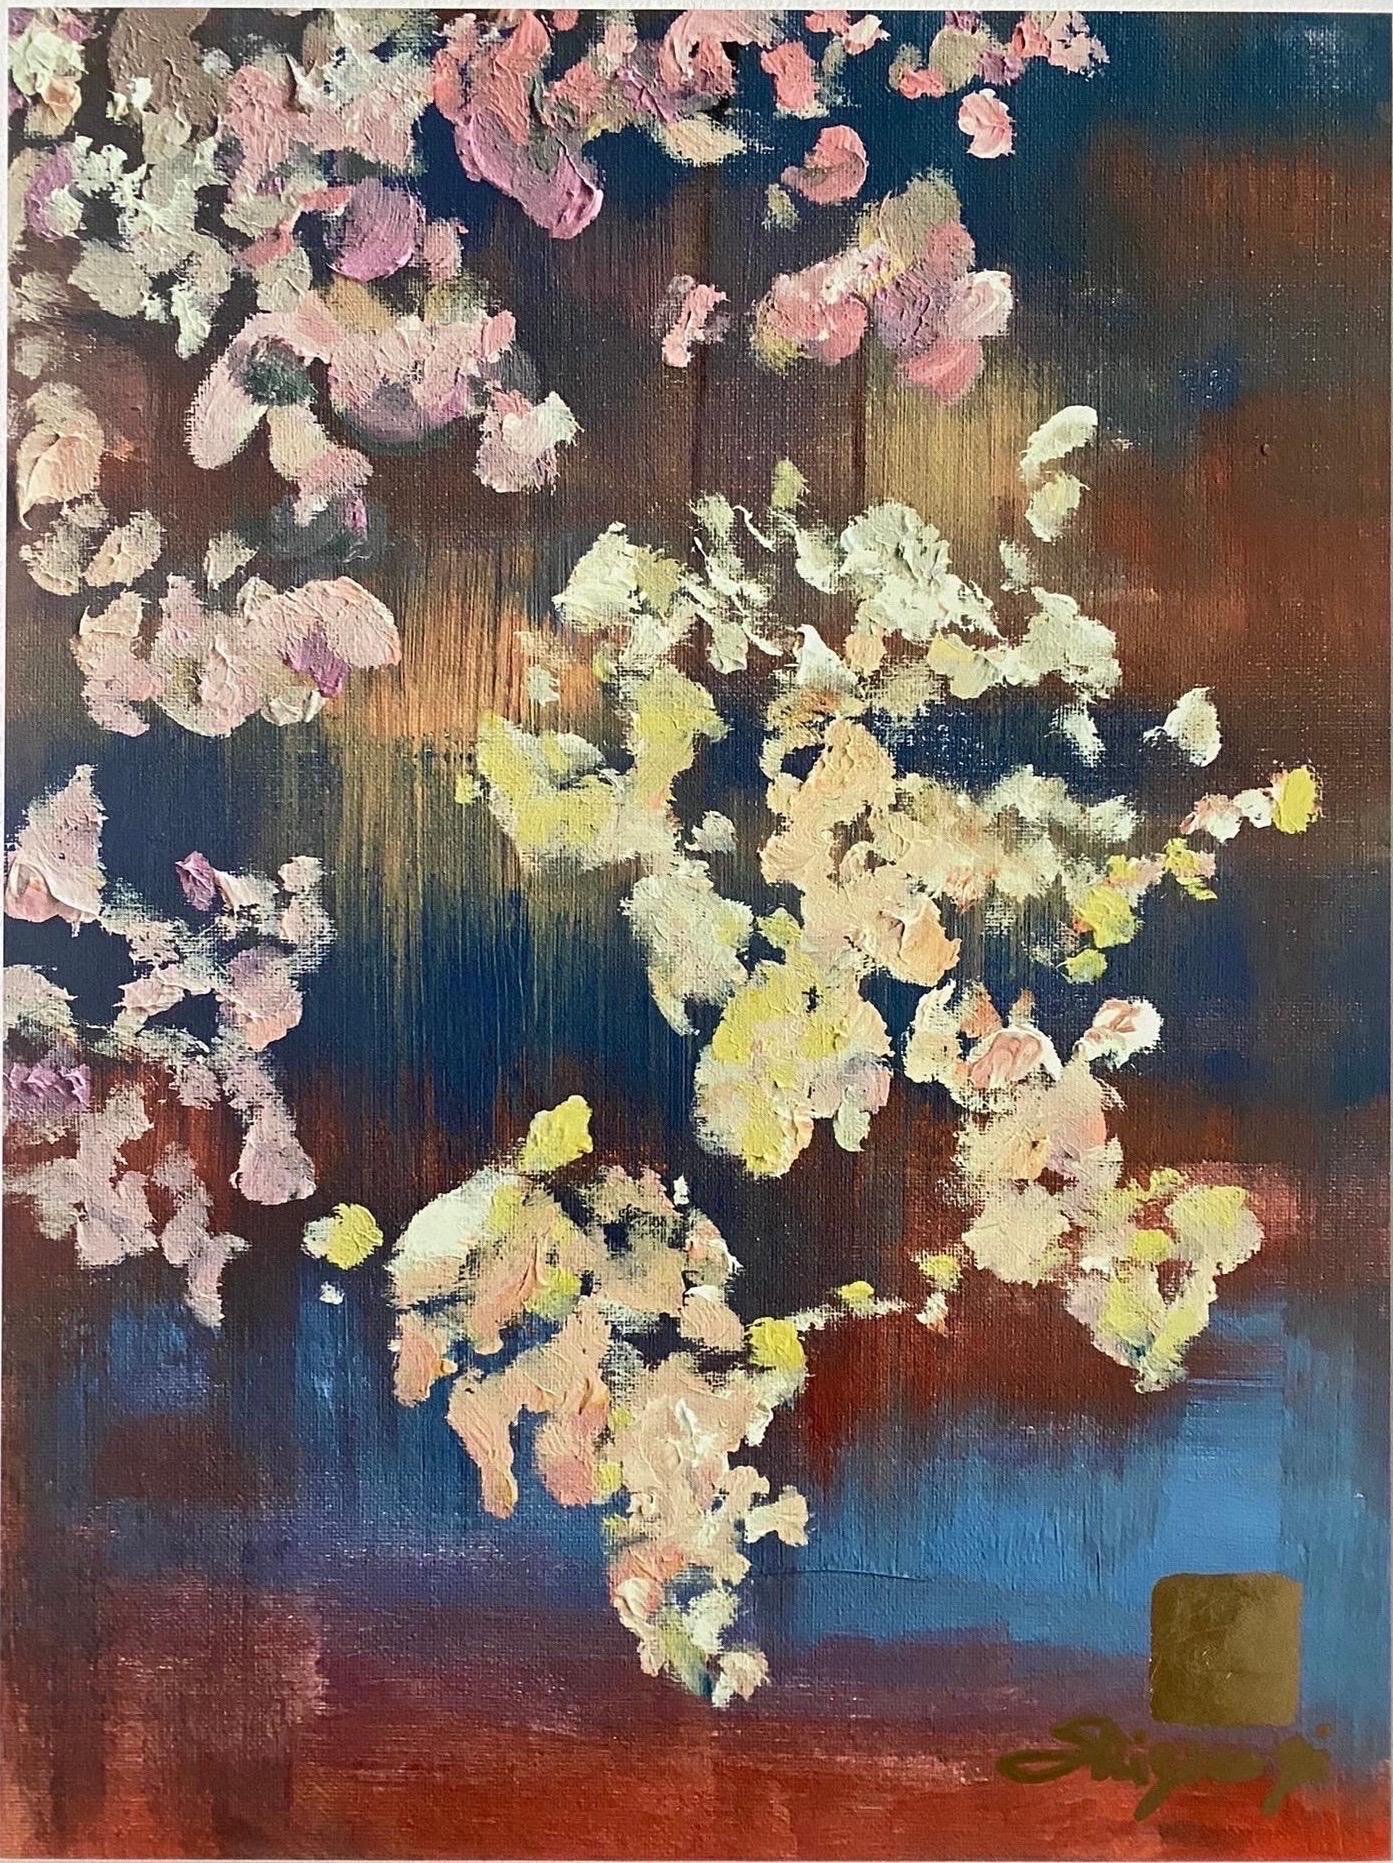 Shizico Yi Landscape Print - London Sakura Limited Edition #2-gold leaf-abstract-expression-UK awarded artist